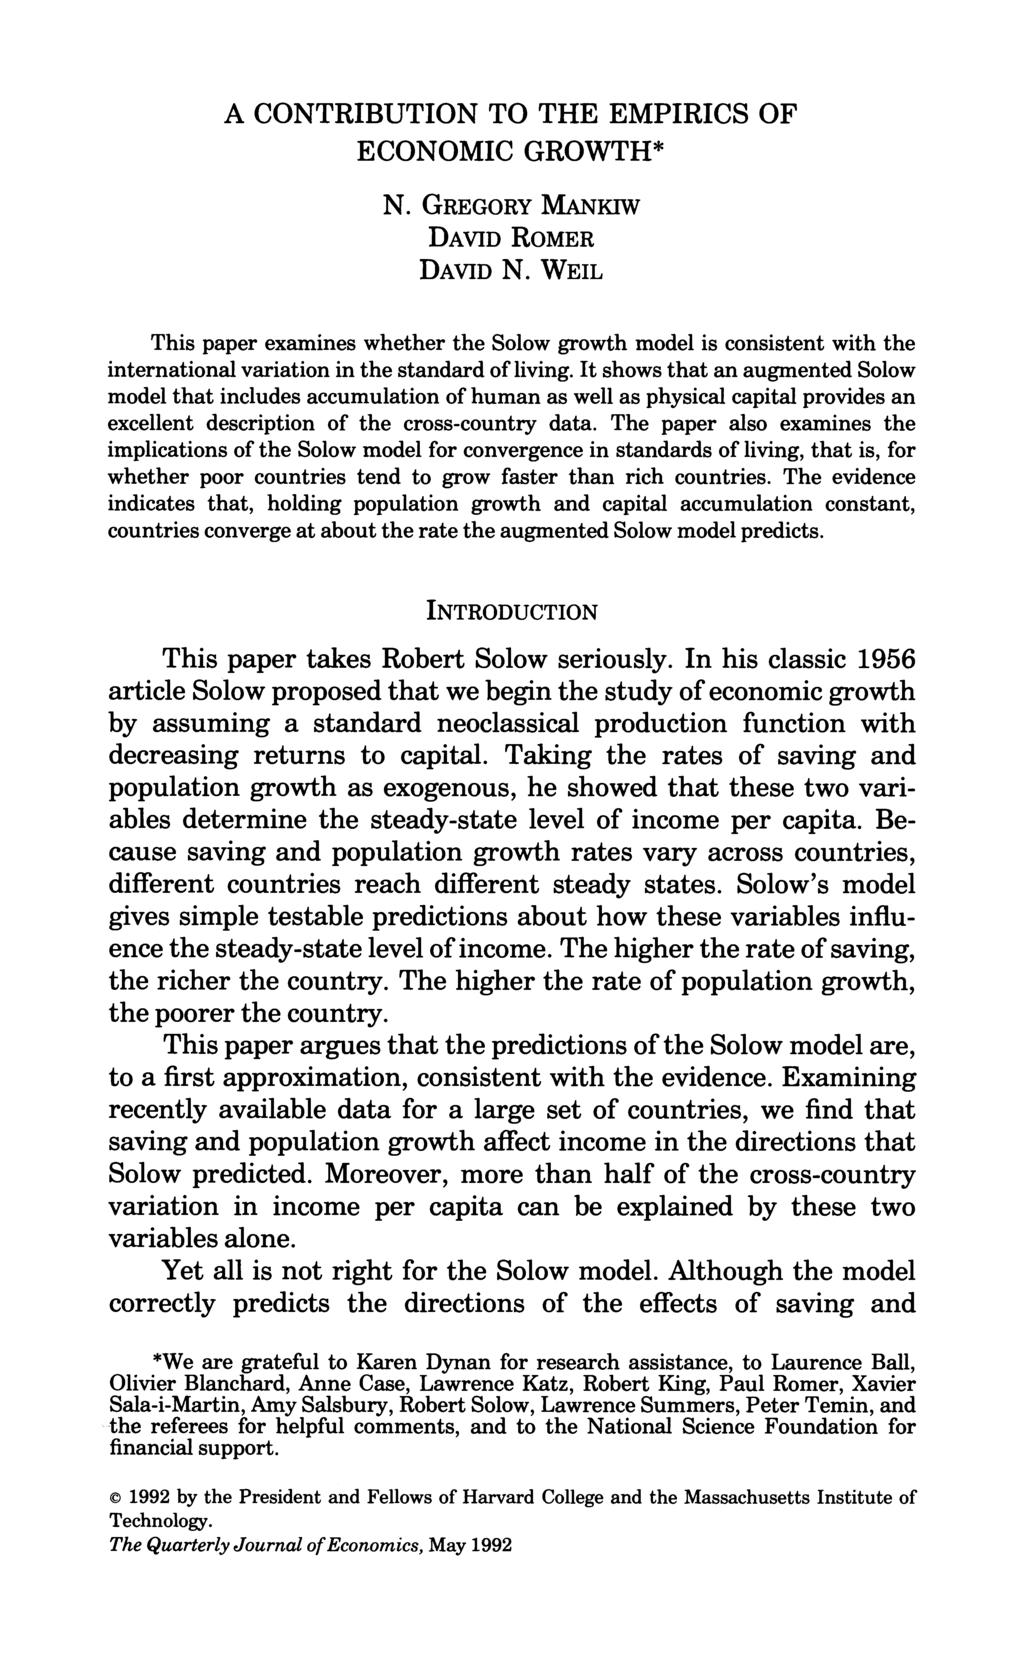 A CONTRIBUTION TO THE EMPIRICS OF ECONOMIC GROWTH* N. GREGORY MANKIW DAVID ROMER DAVID N.